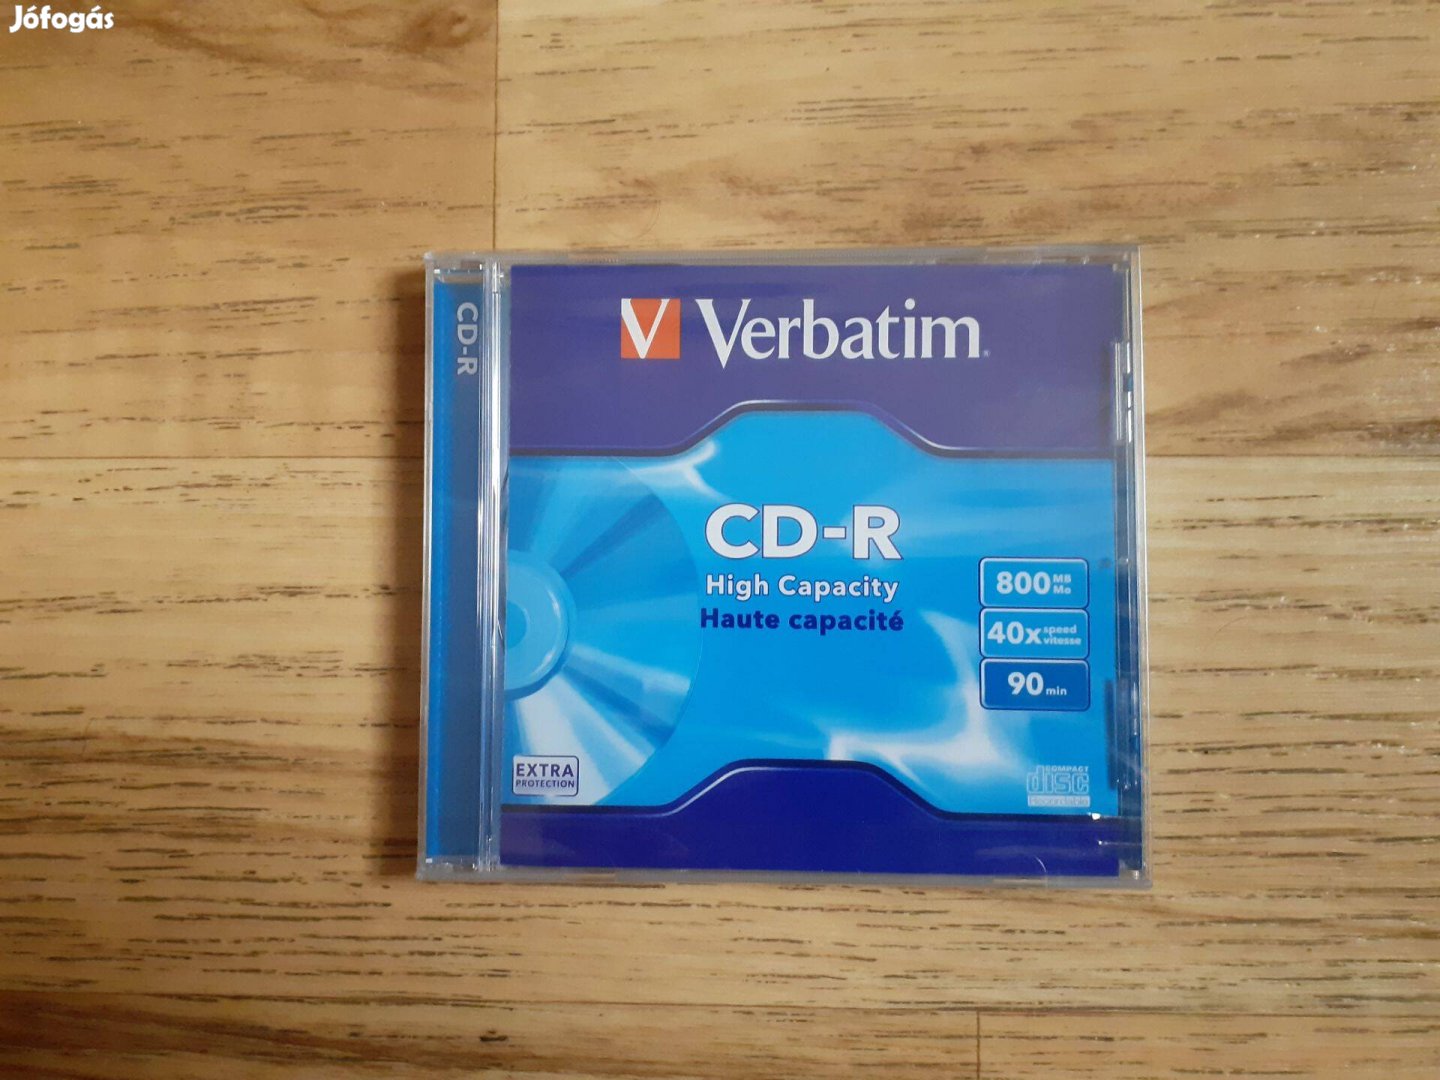 Verbatim CD-R 40X, 800 MB, 90 min, High Capacity (Bontatlan példány)